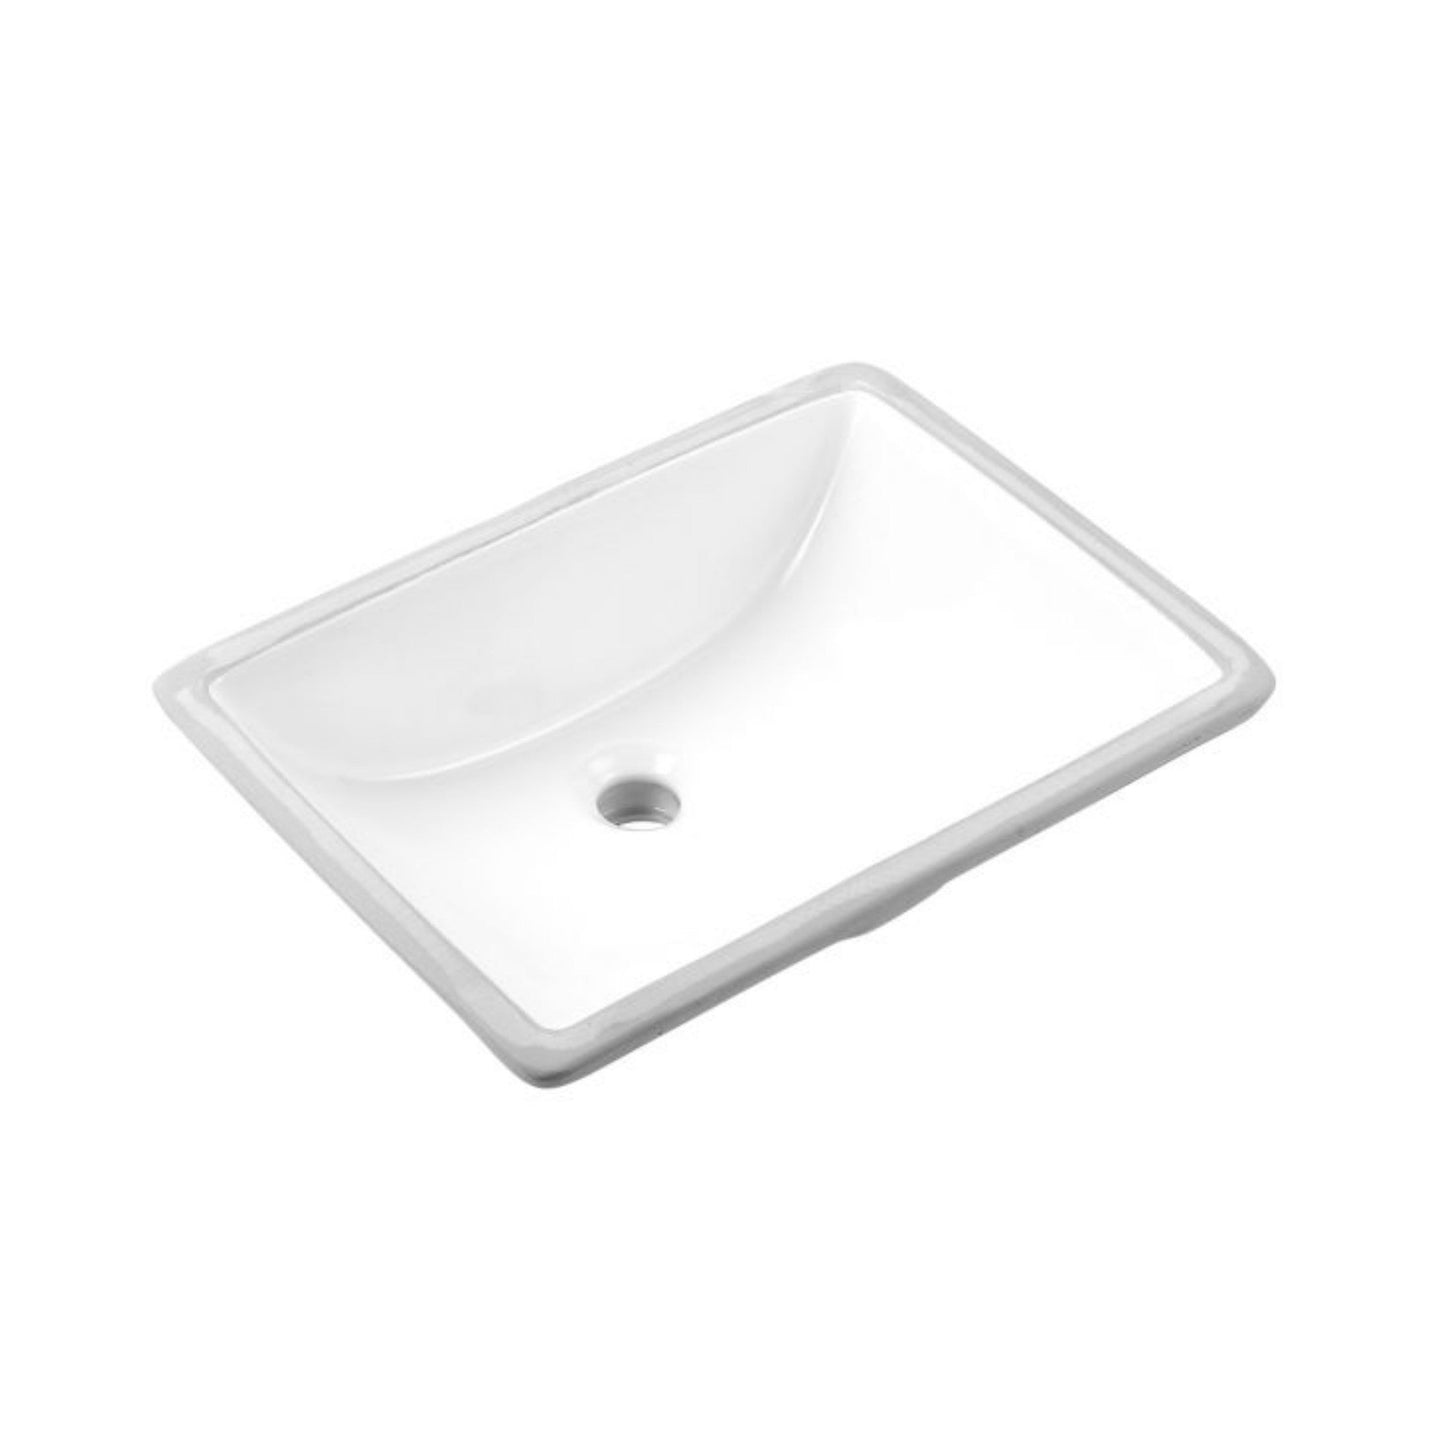 Ratel 18" x 13" White Rectangular Ceramic Undermount Bathroom Sink